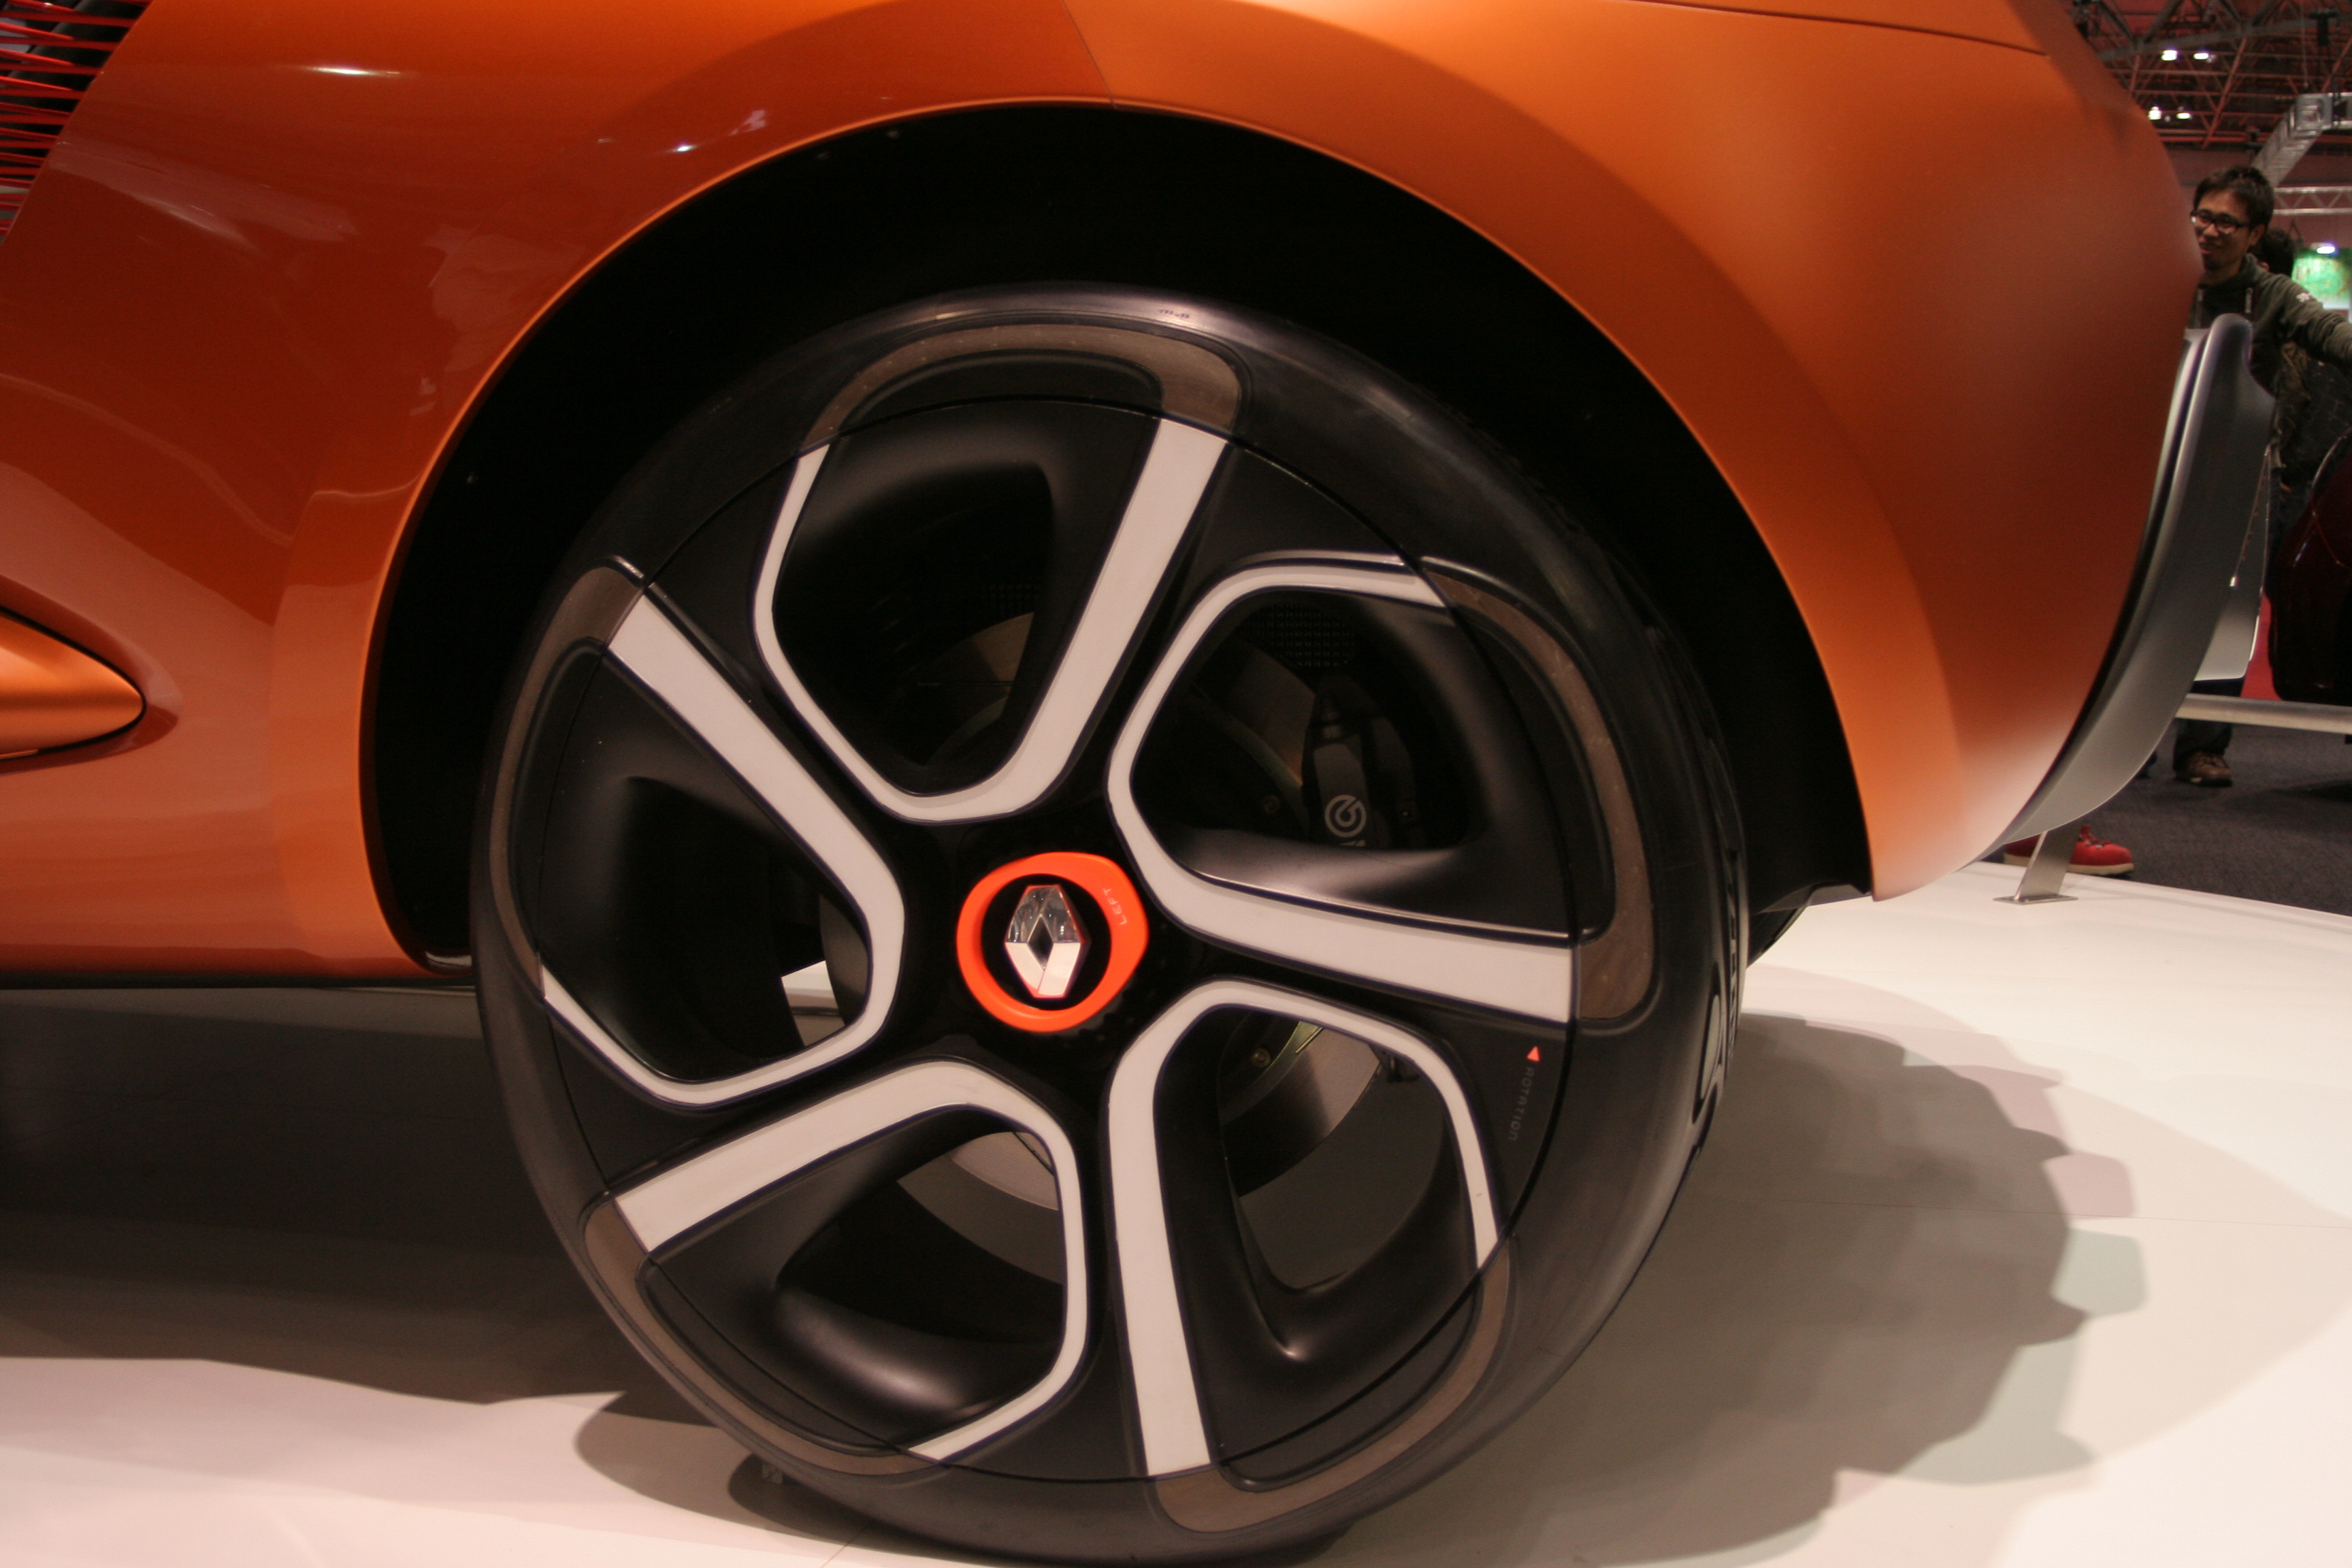 Renault Captur wheel closeup